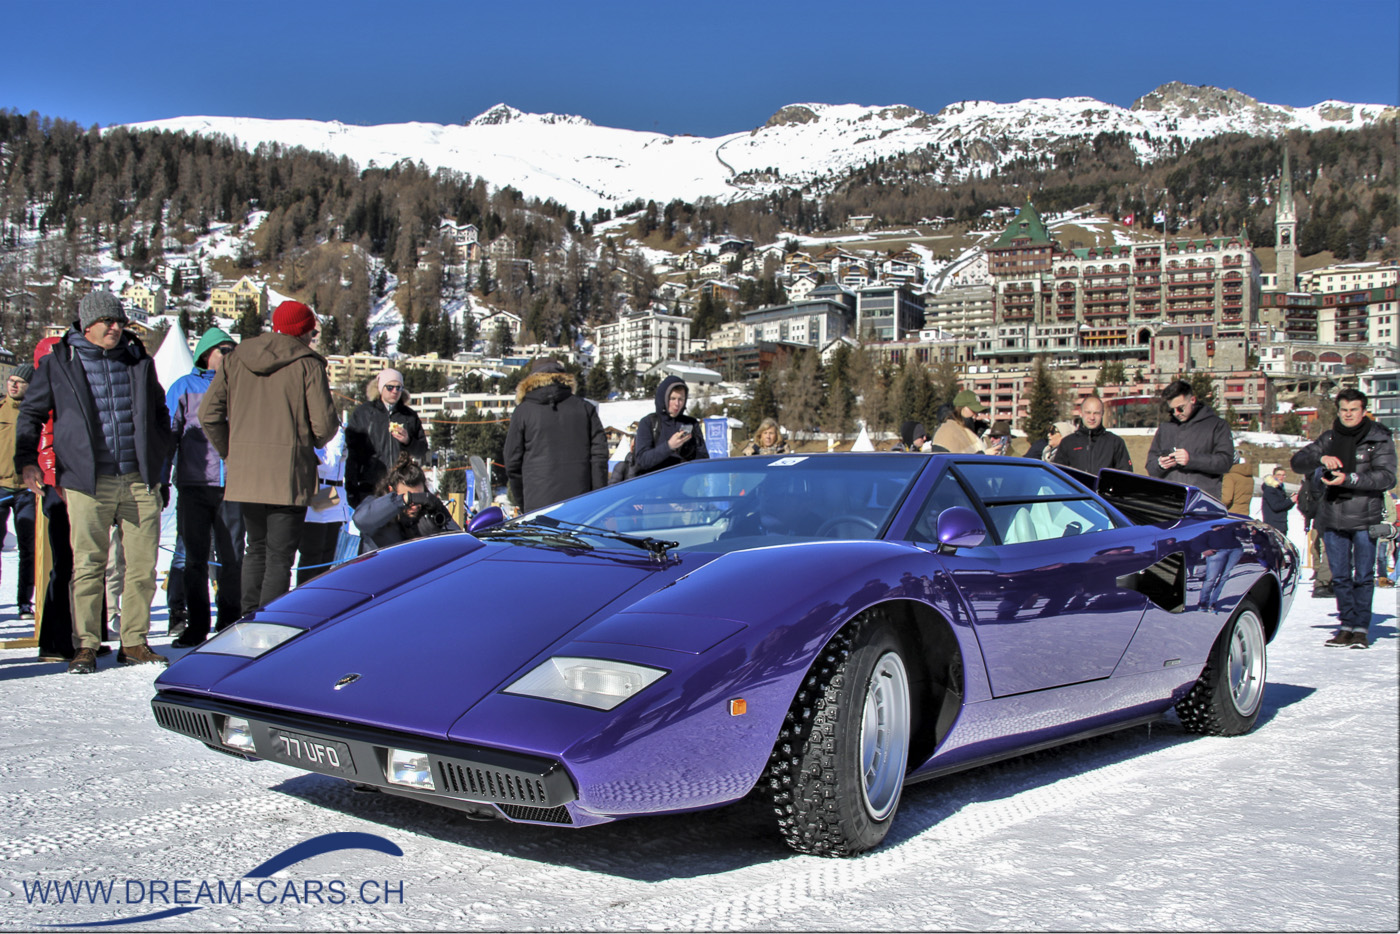 THE ICE, St. Moritz, 26. Februar 2022. Der Lamborghini Countach in der Urform